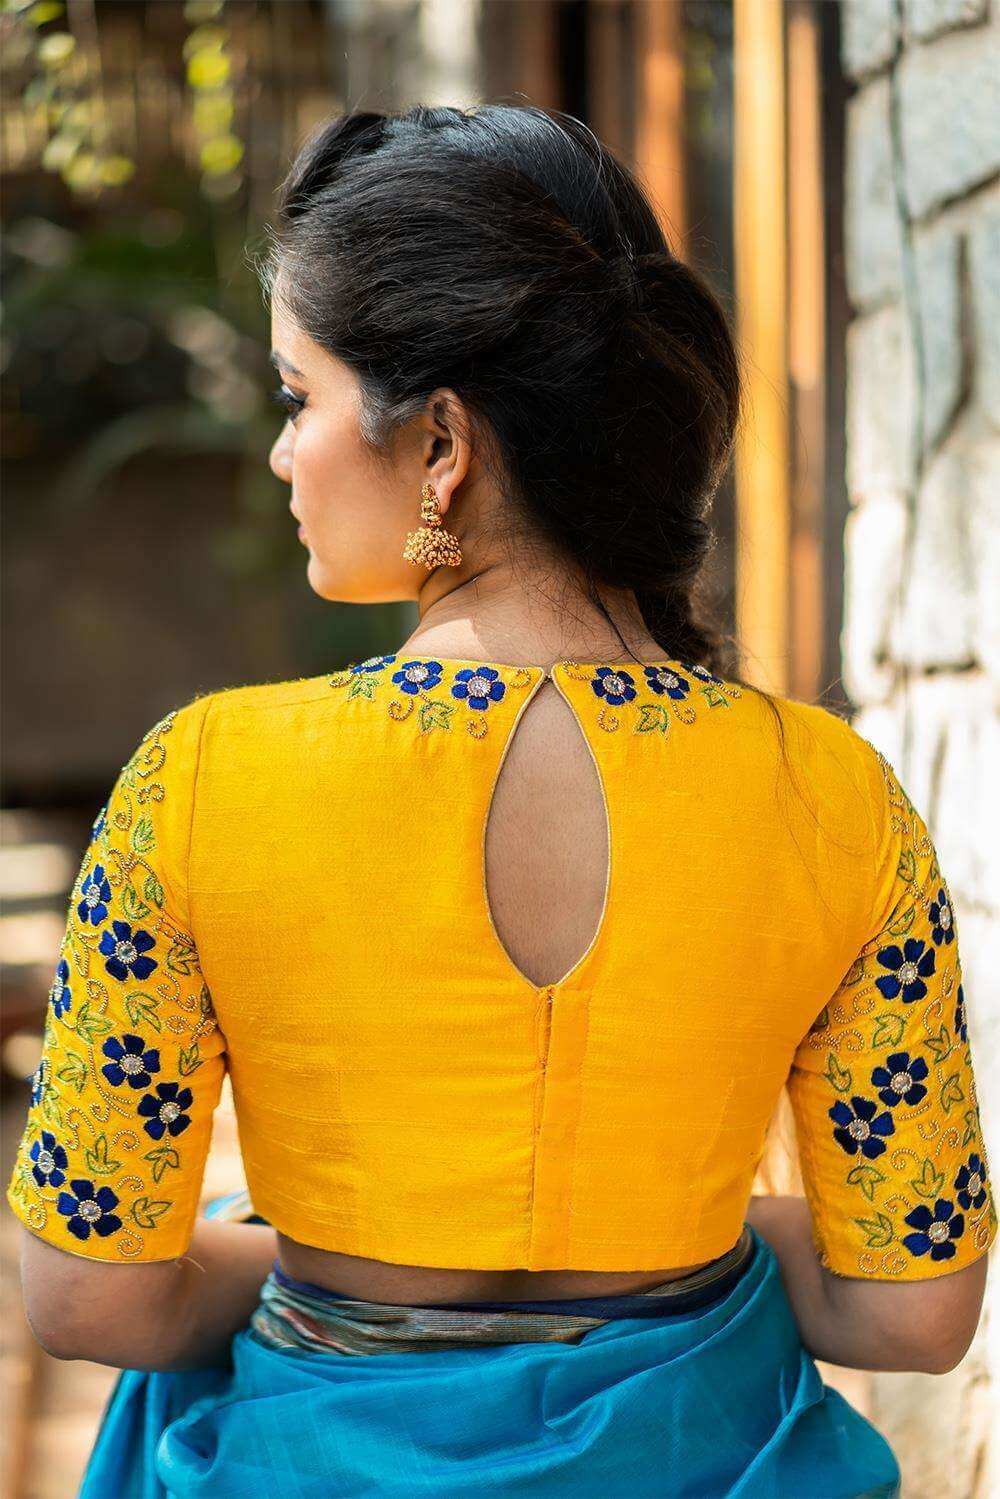 Abbakka Devi - Hand embroidered blouse - House of Blouse